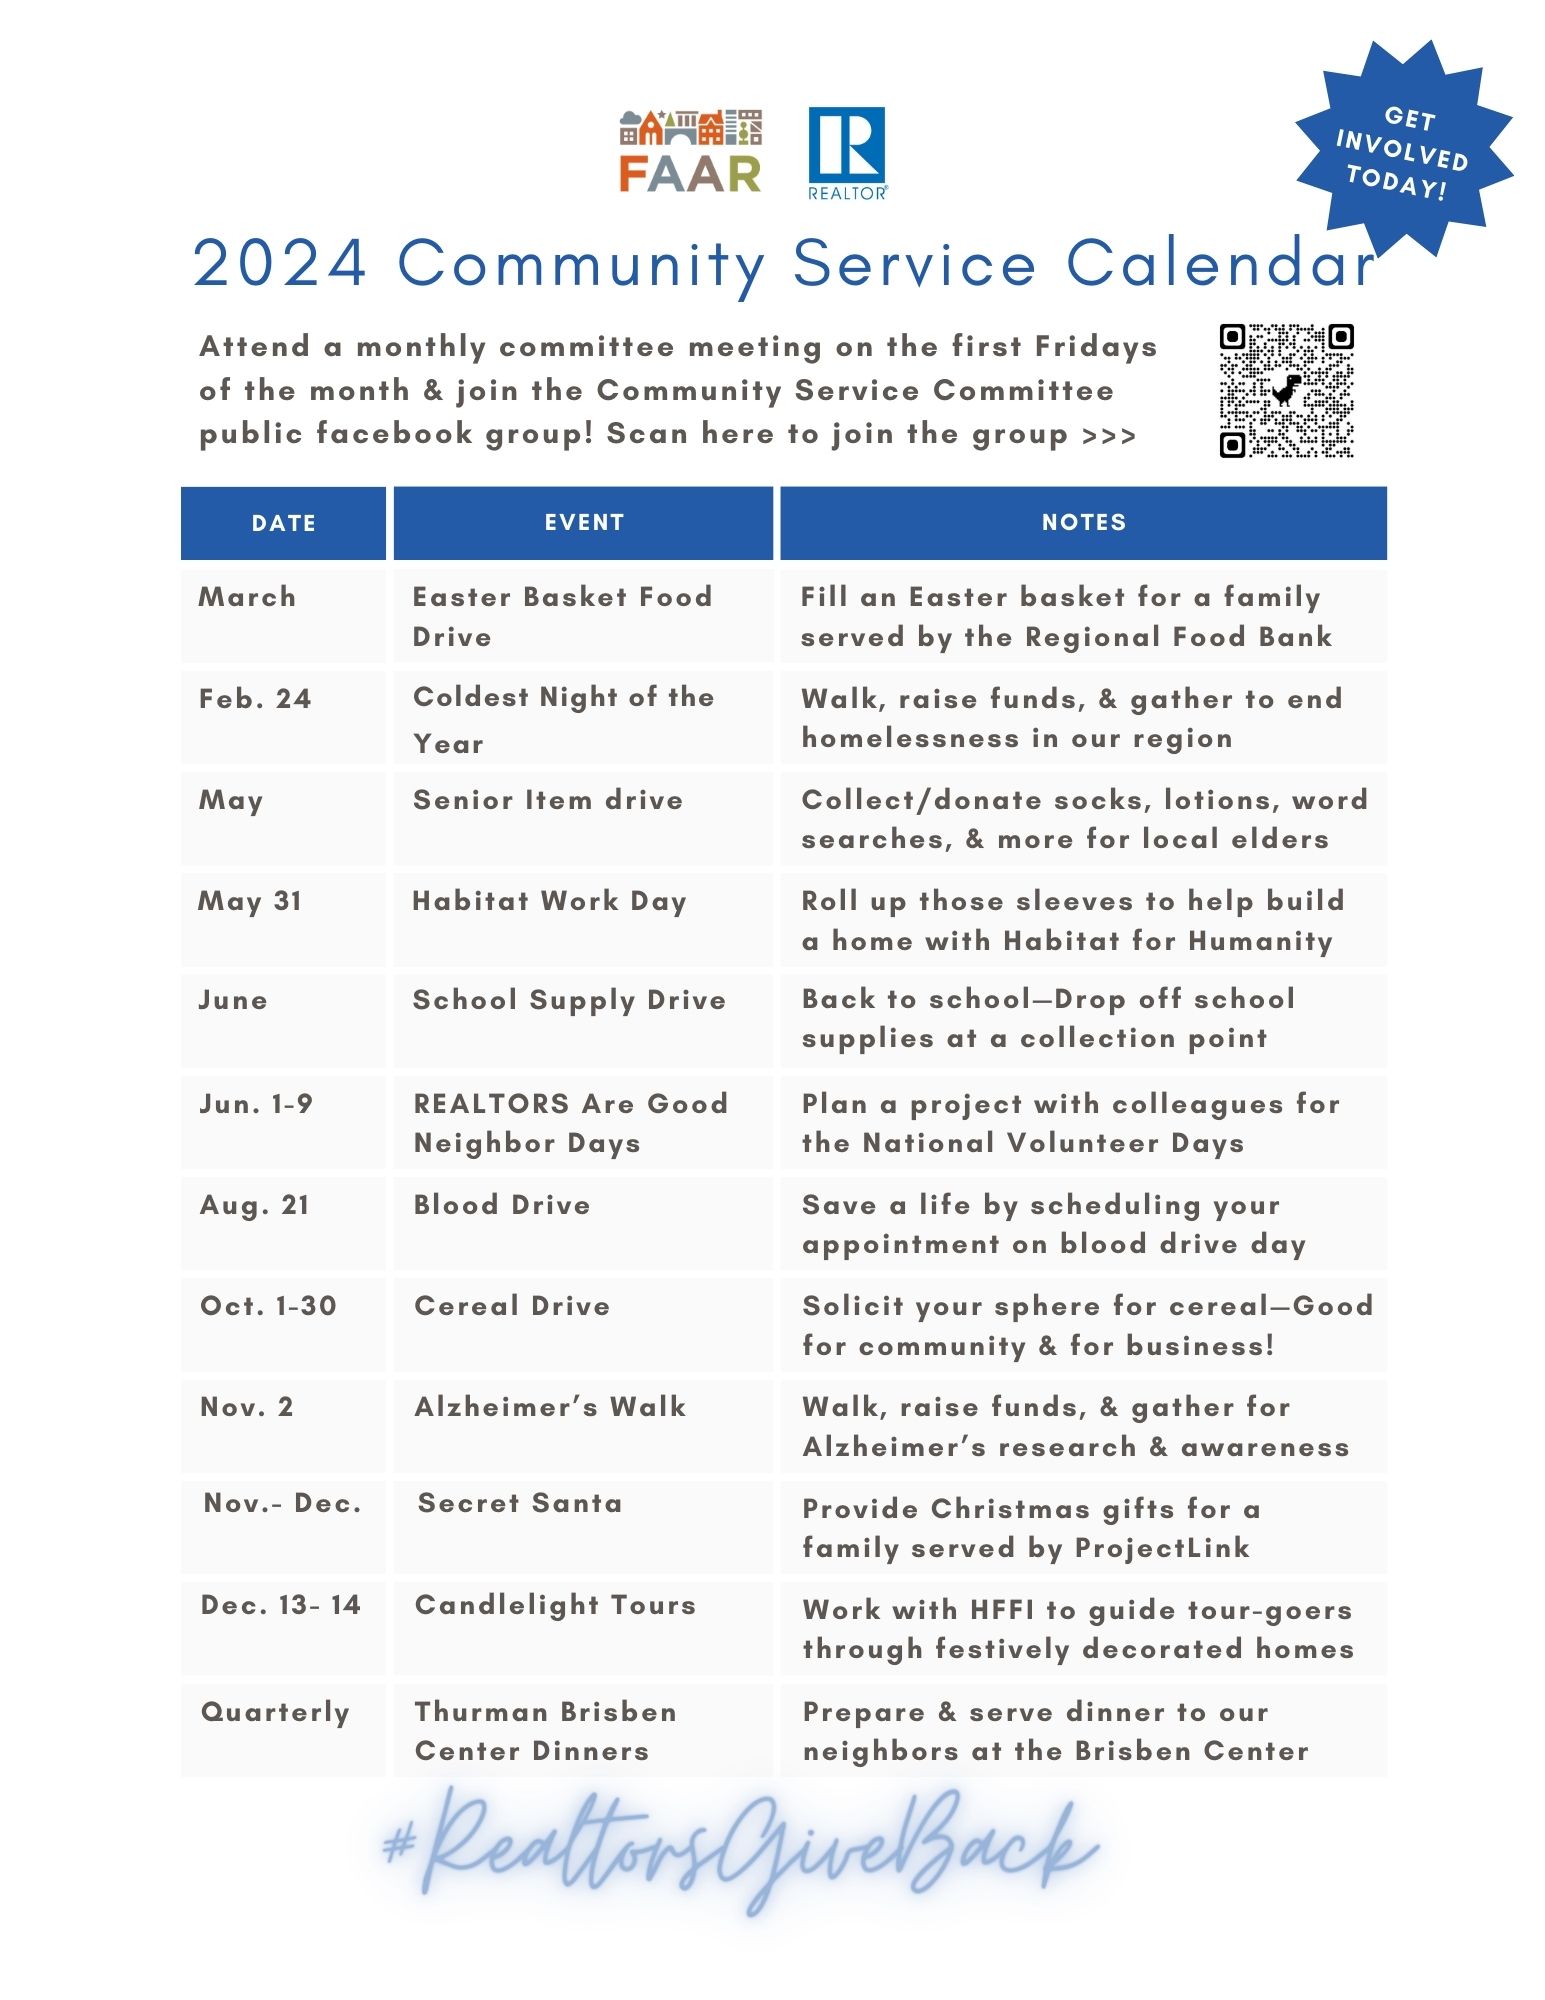 2024 FAAR Community Service Calendar projects list